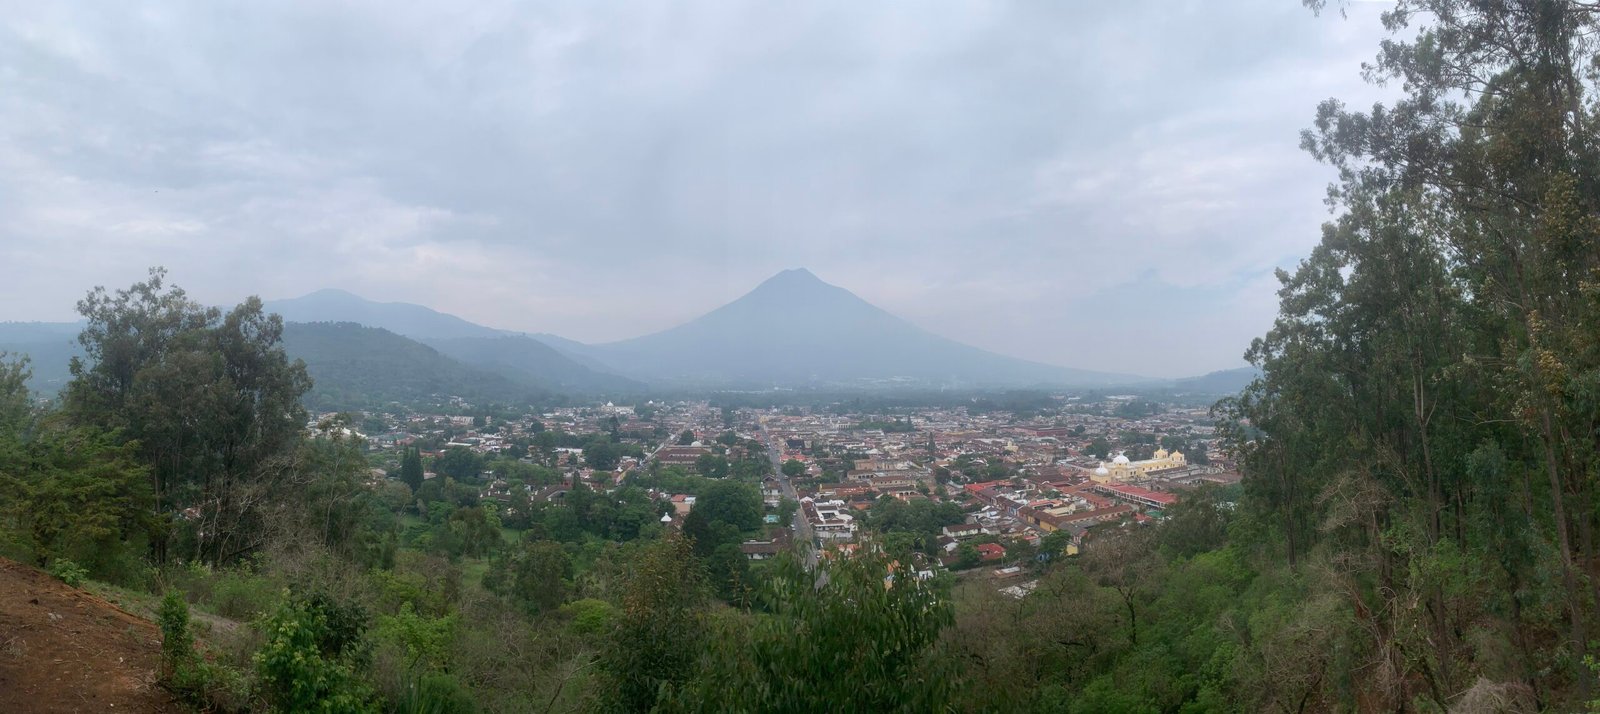 7 Interesting Facts About Guatemala